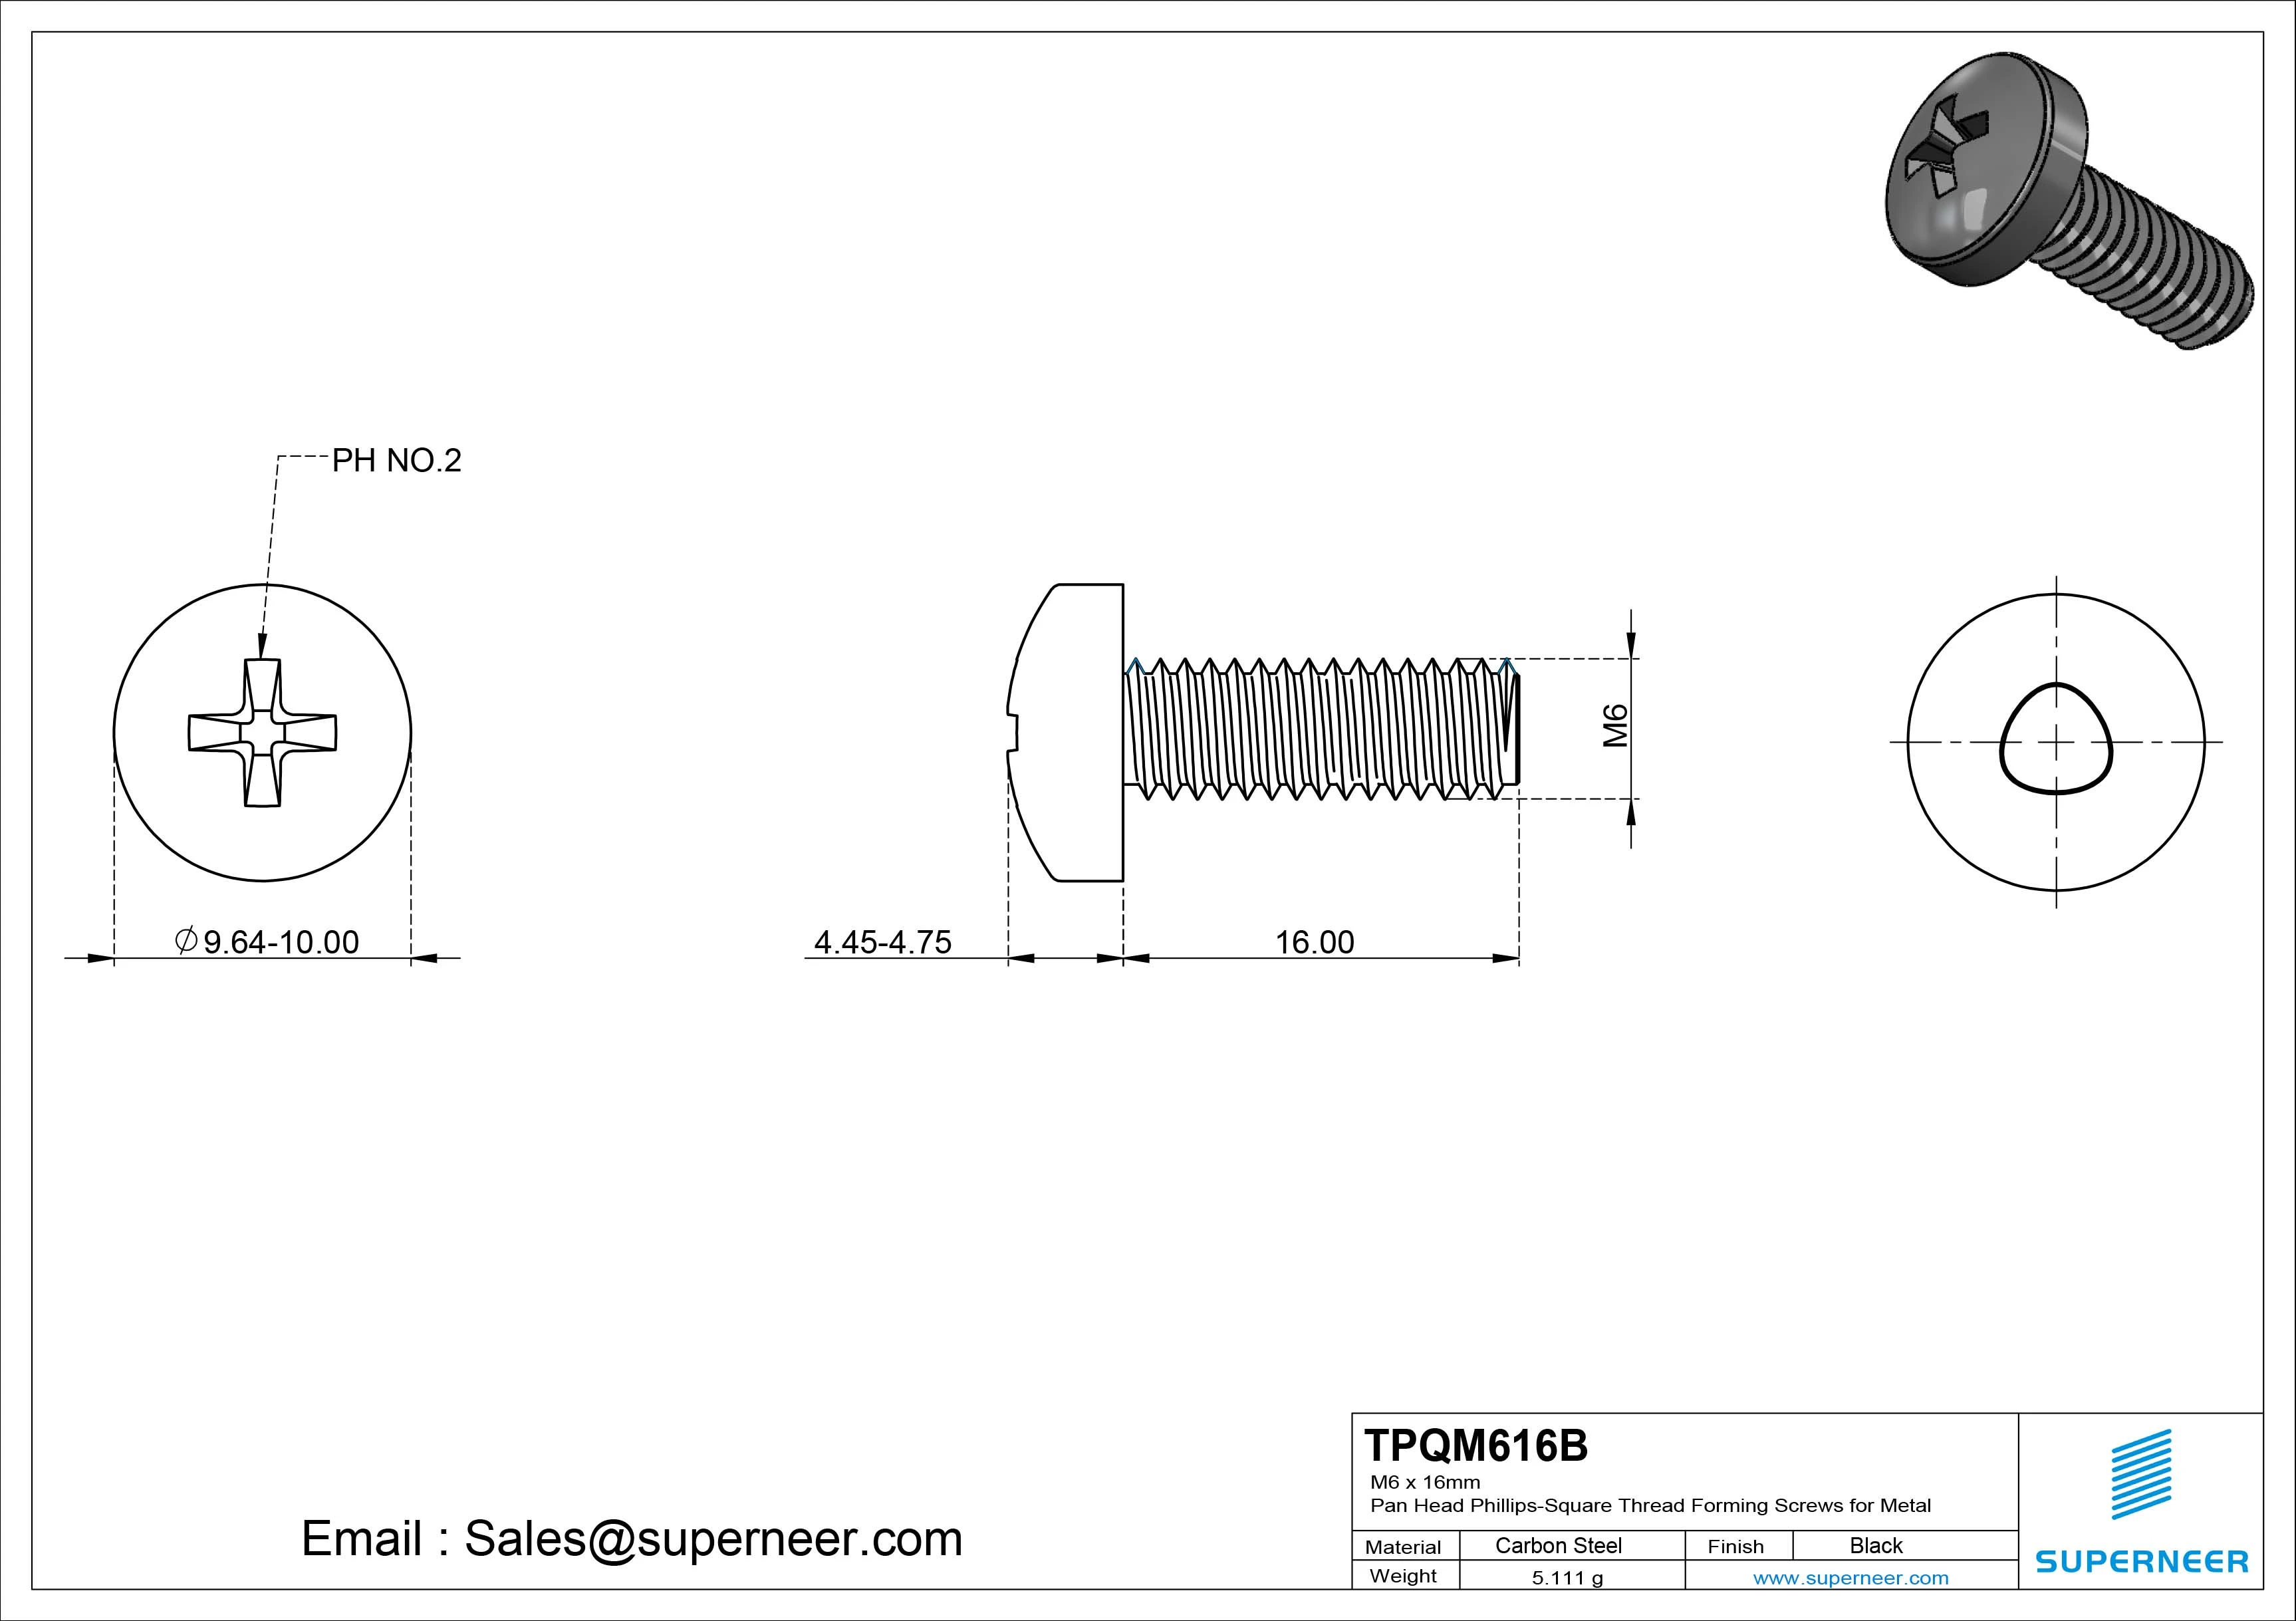 M6 × 16mm Pan Head Phillips-Square Thread Forming Screws for Metal Steel Black